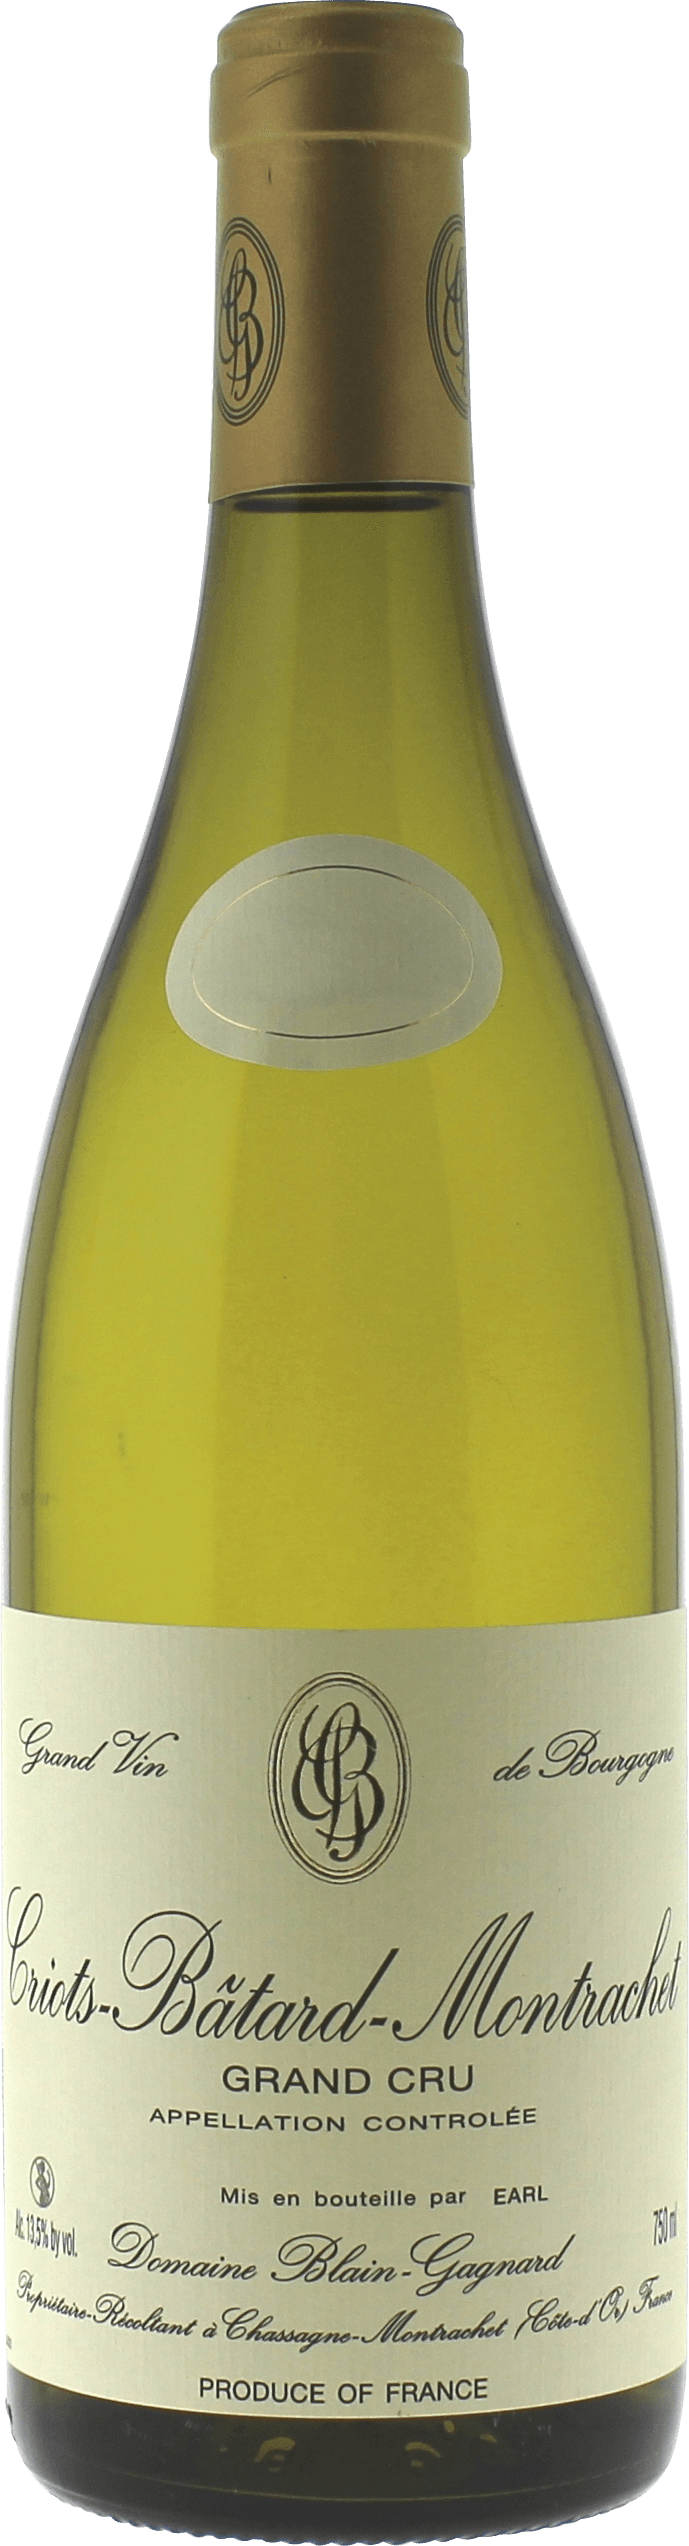 Criots-batard montrachet grand cru 2017 Domaine BLAIN GAGNARD, Bourgogne blanc